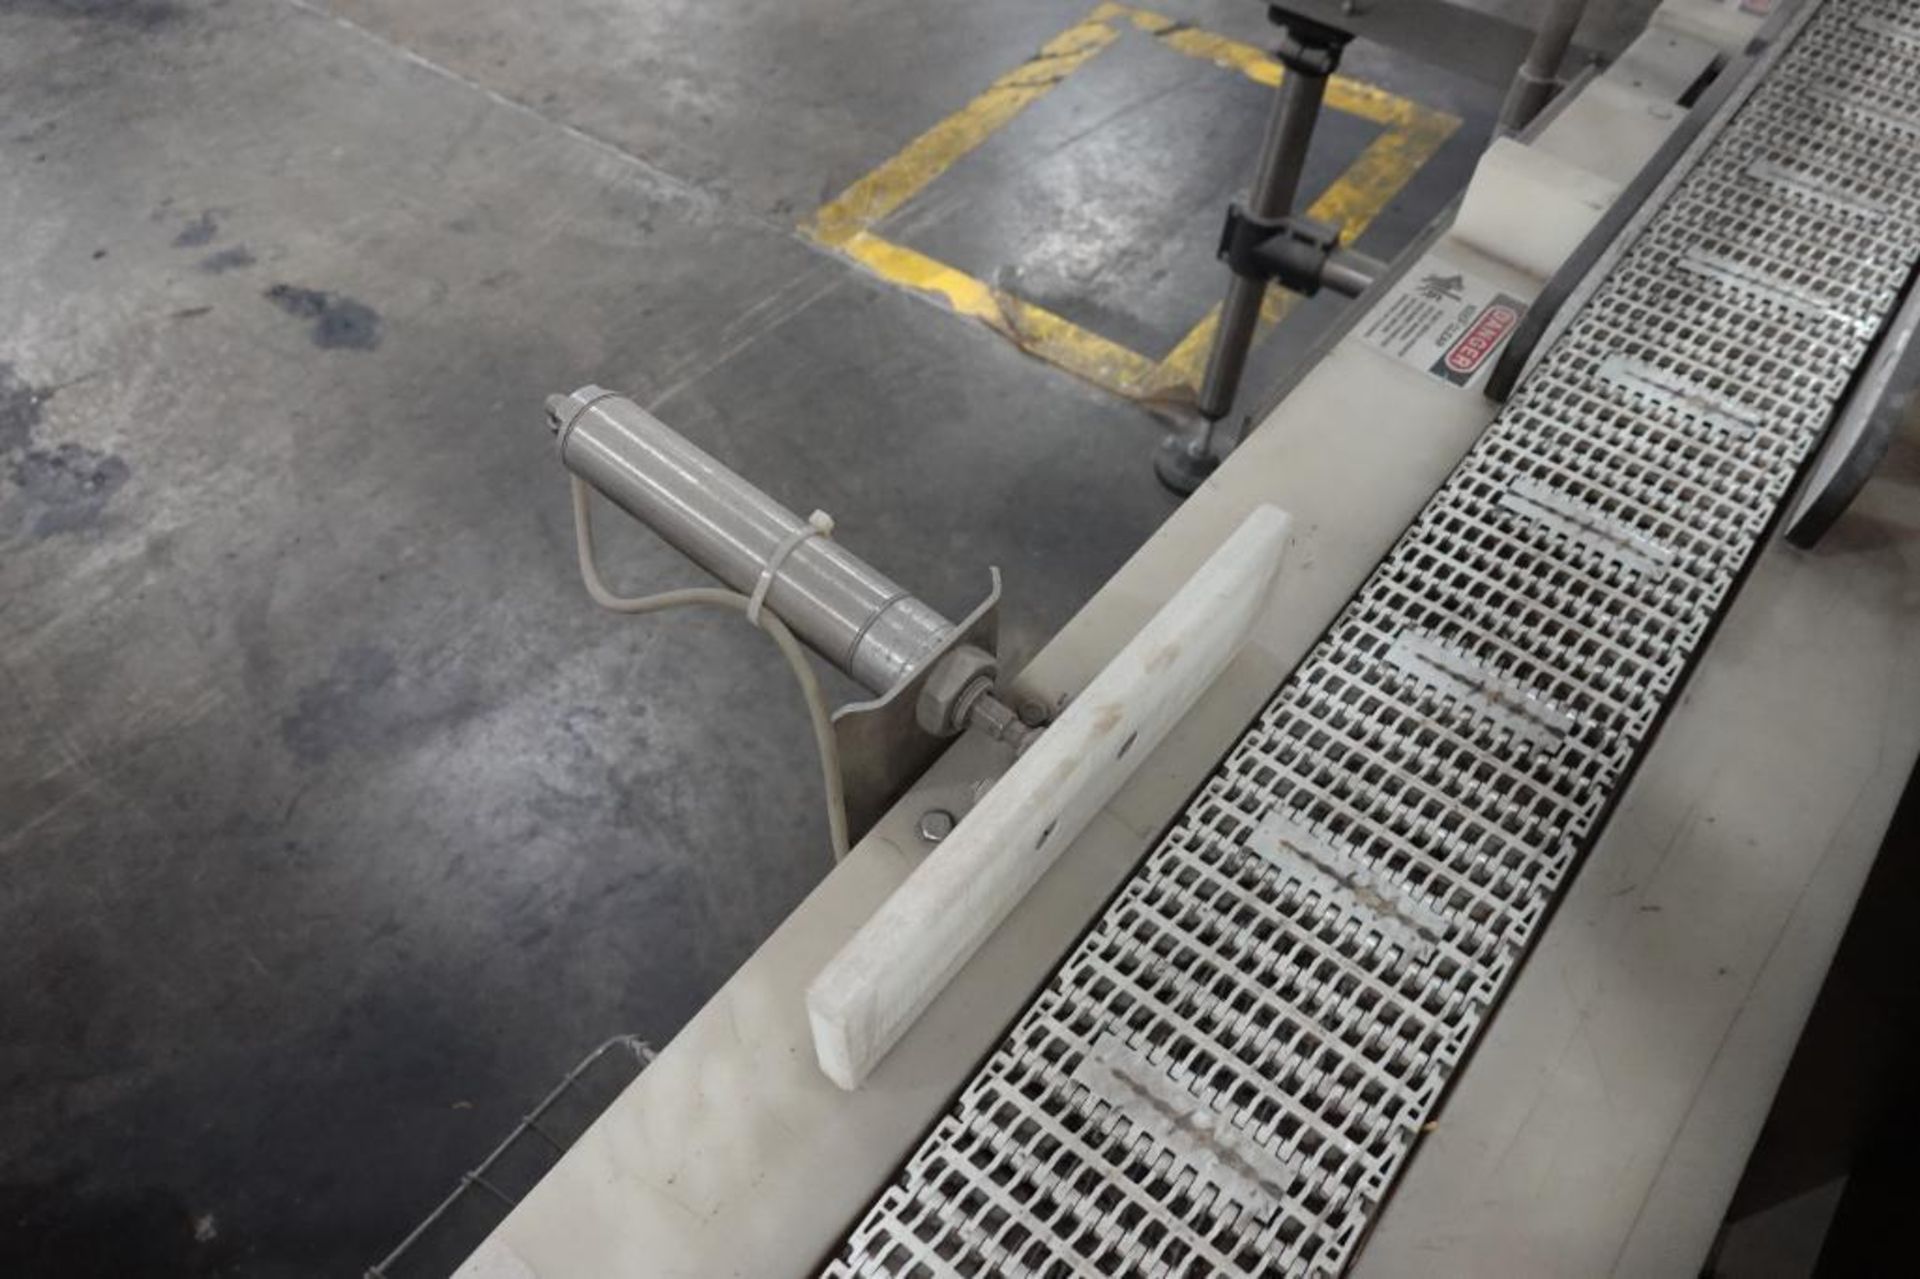 Safeline metal detector with conveyor - Image 5 of 8